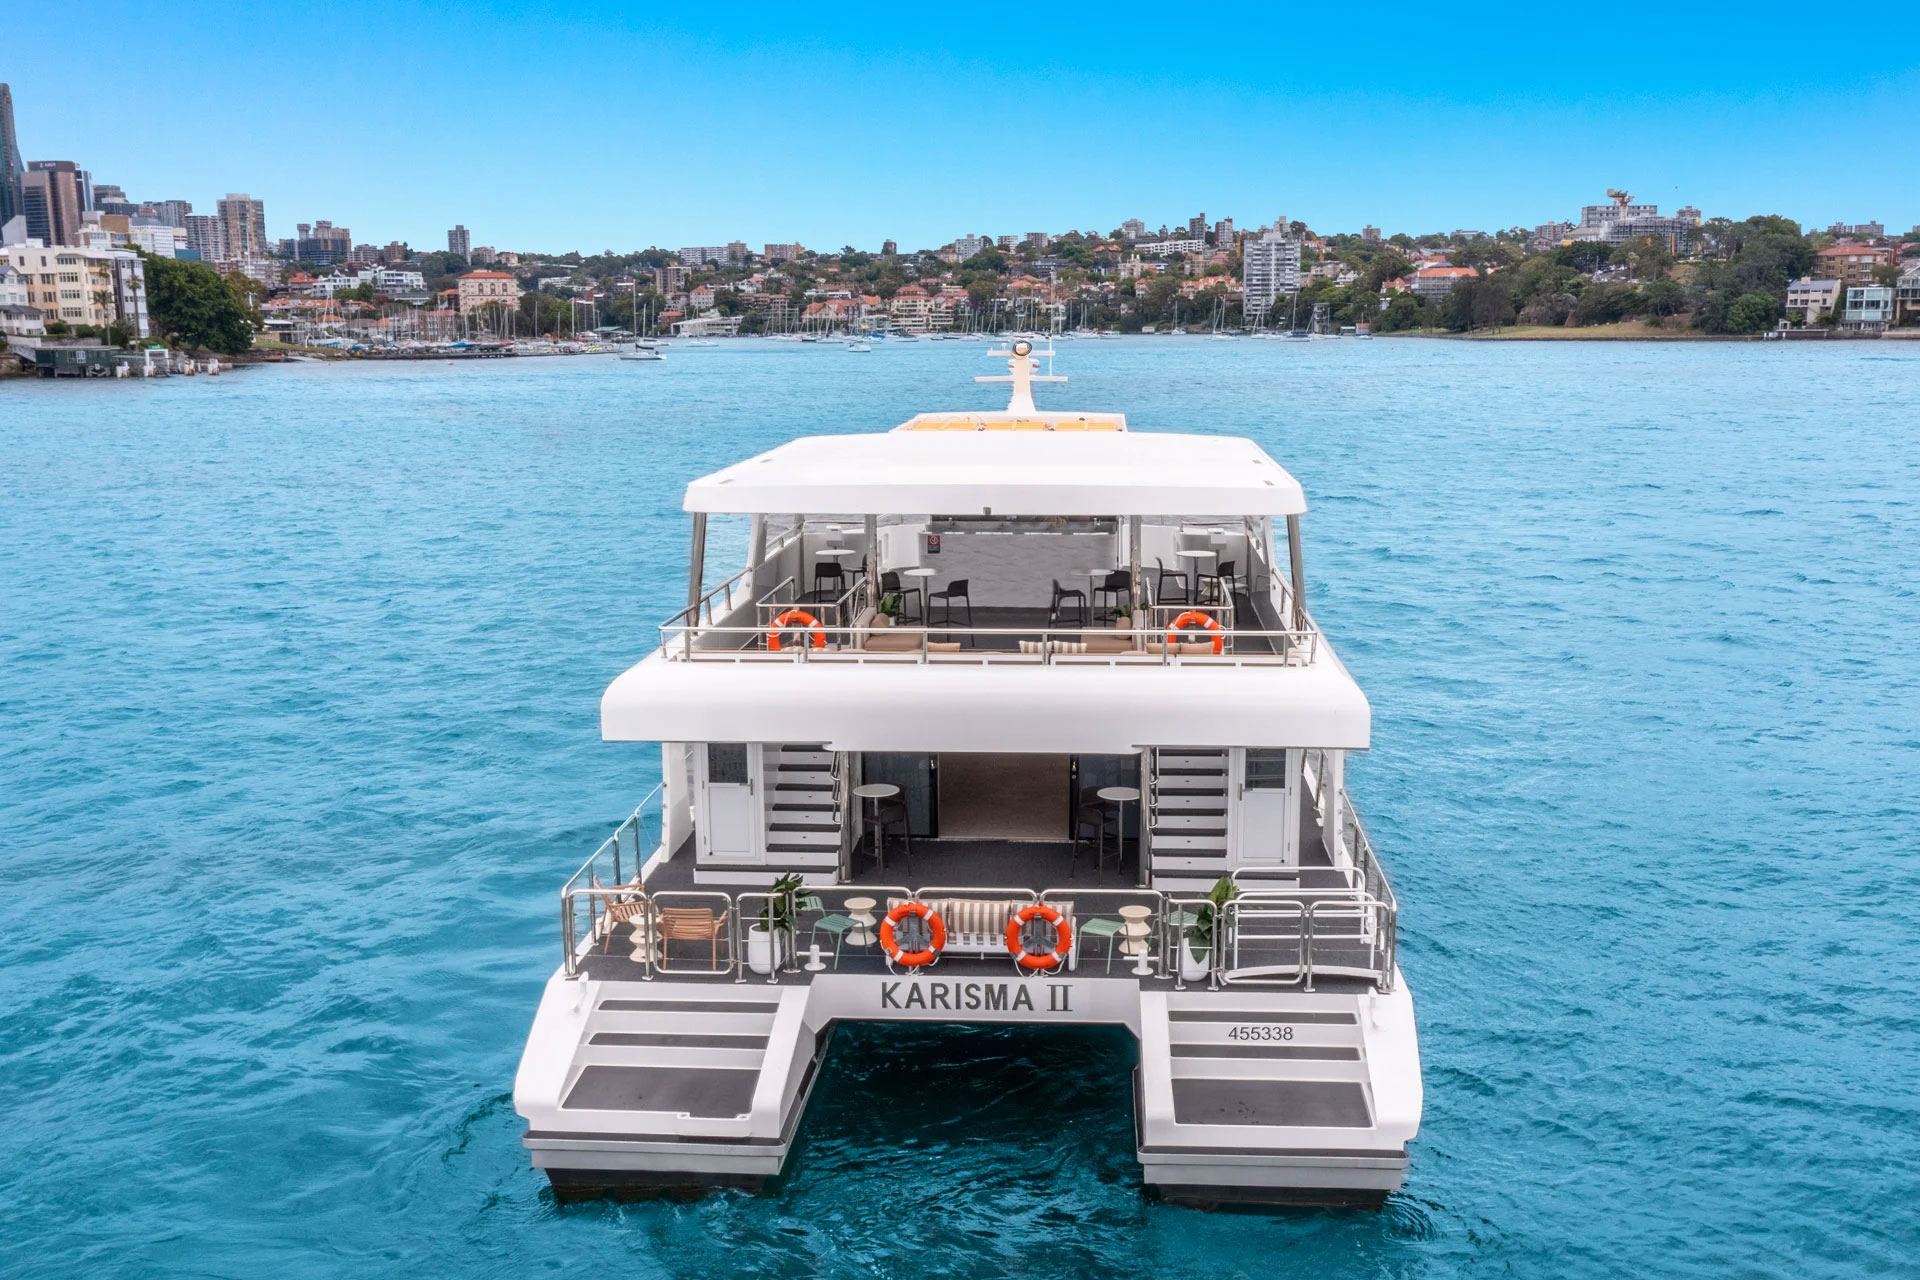 Karisma II Event Yacht in Sydney Harbour